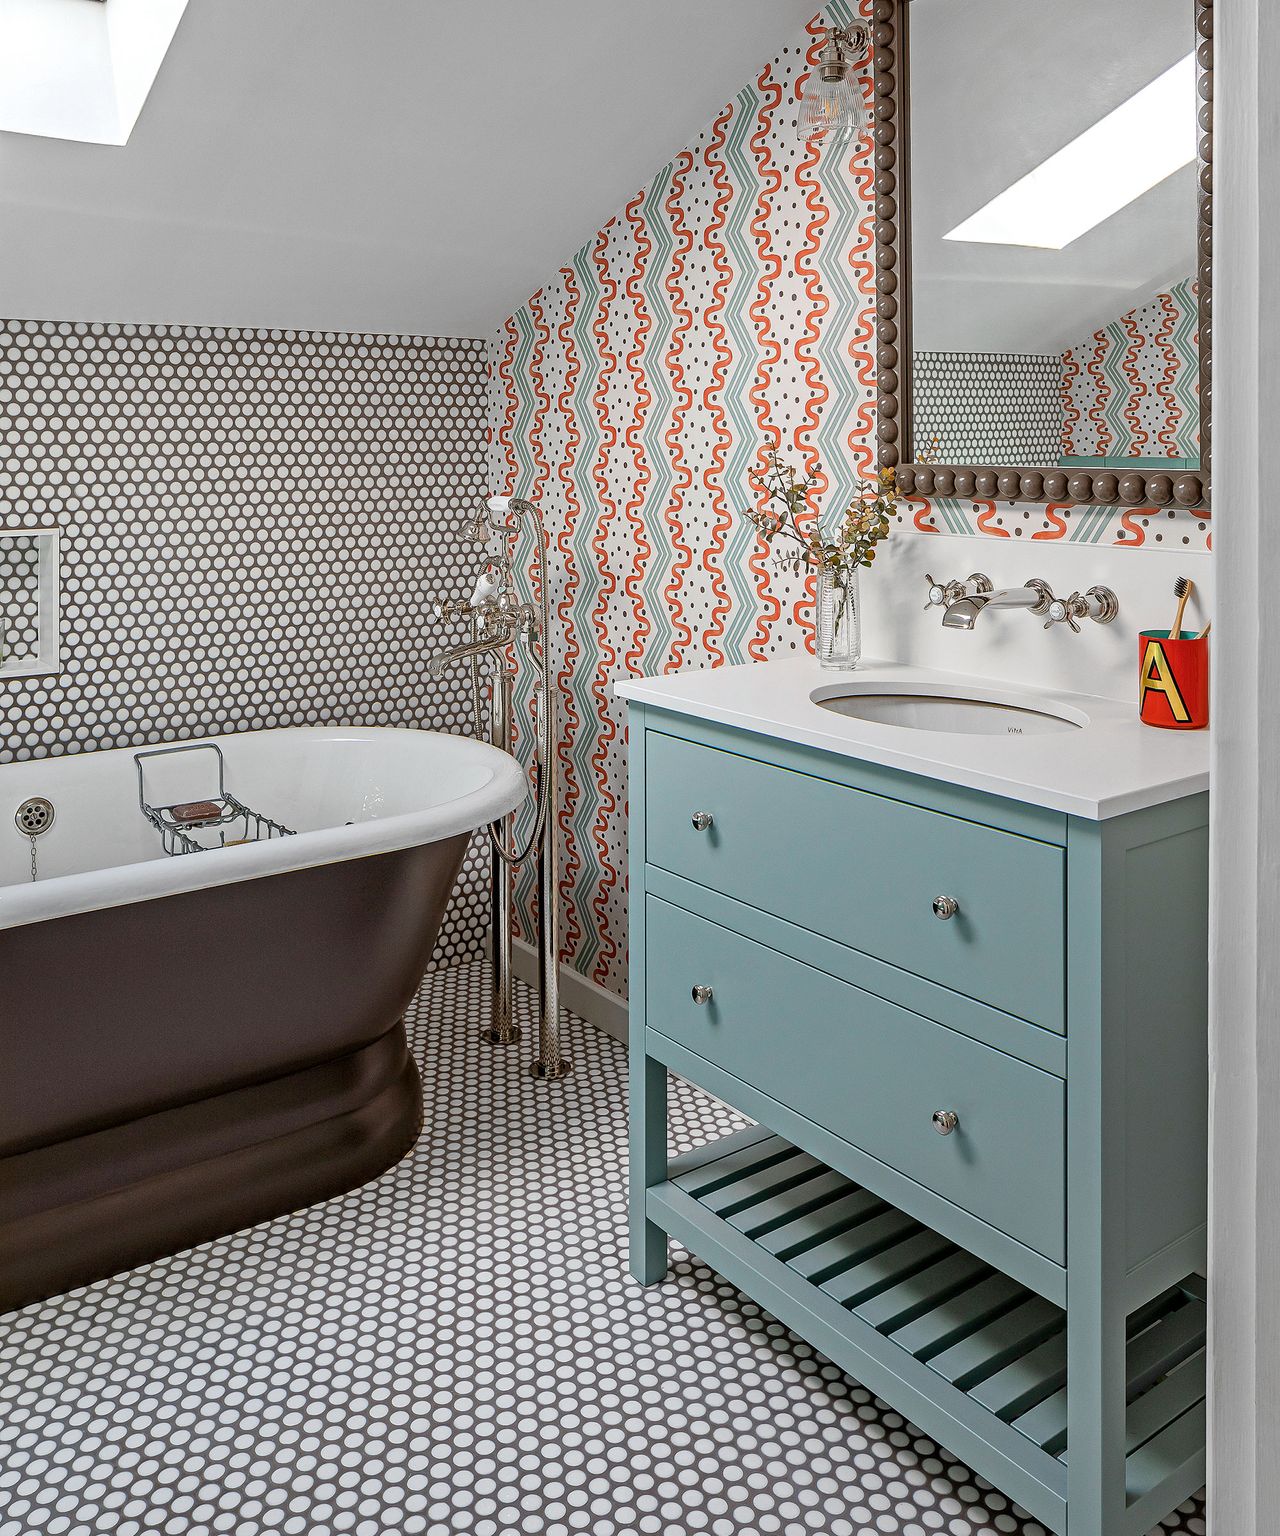 Bathroom tile ideas: 31 designs inspired by bathroom tiles